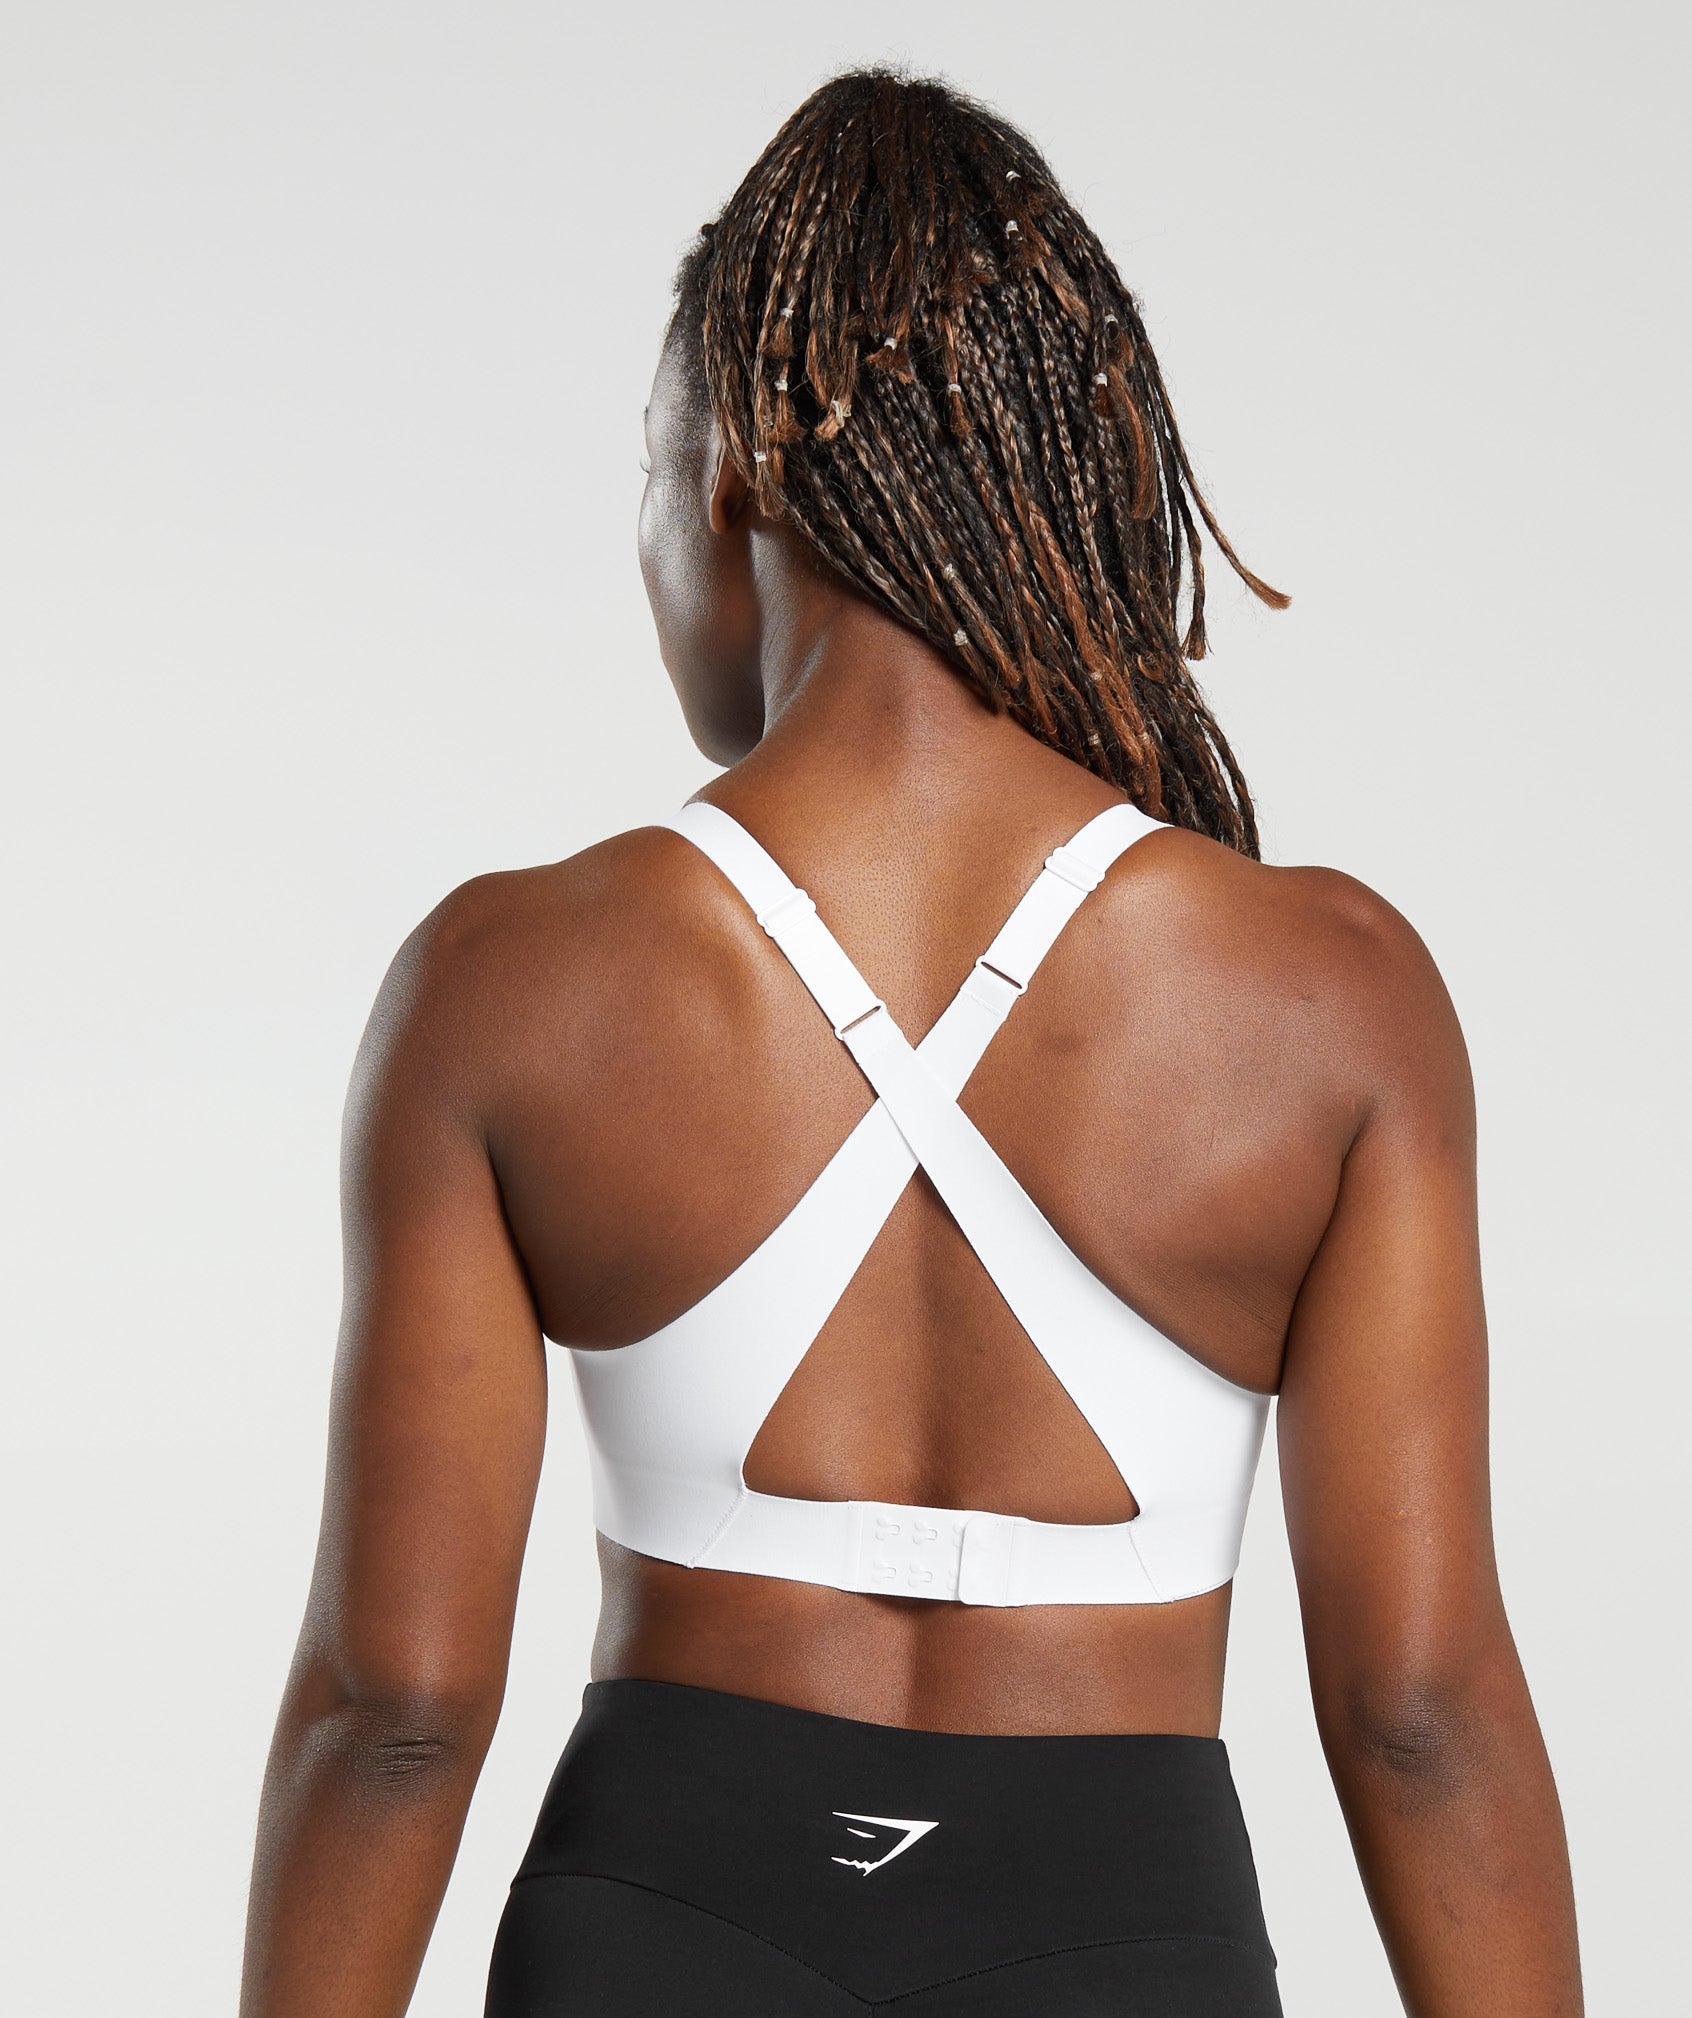 YDKZYMD Gym Sports Bras for Women High Neck Short Sleeve Longline Comfort  Bras 